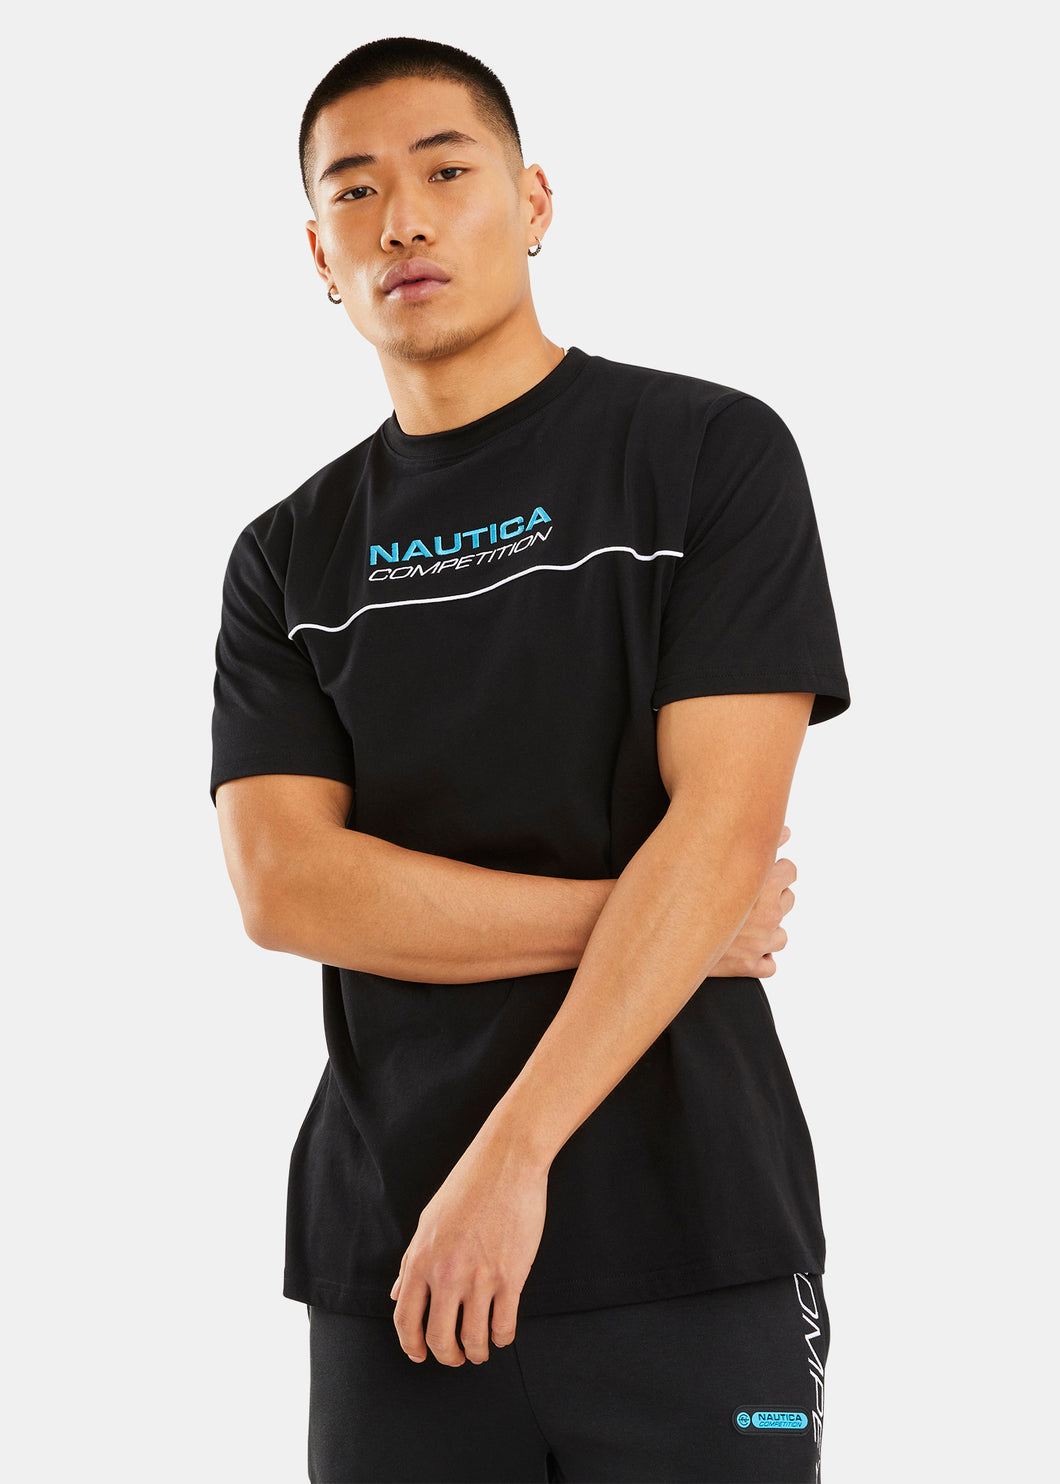 Nautica Competition Barrett T-Shirt - Black - Front